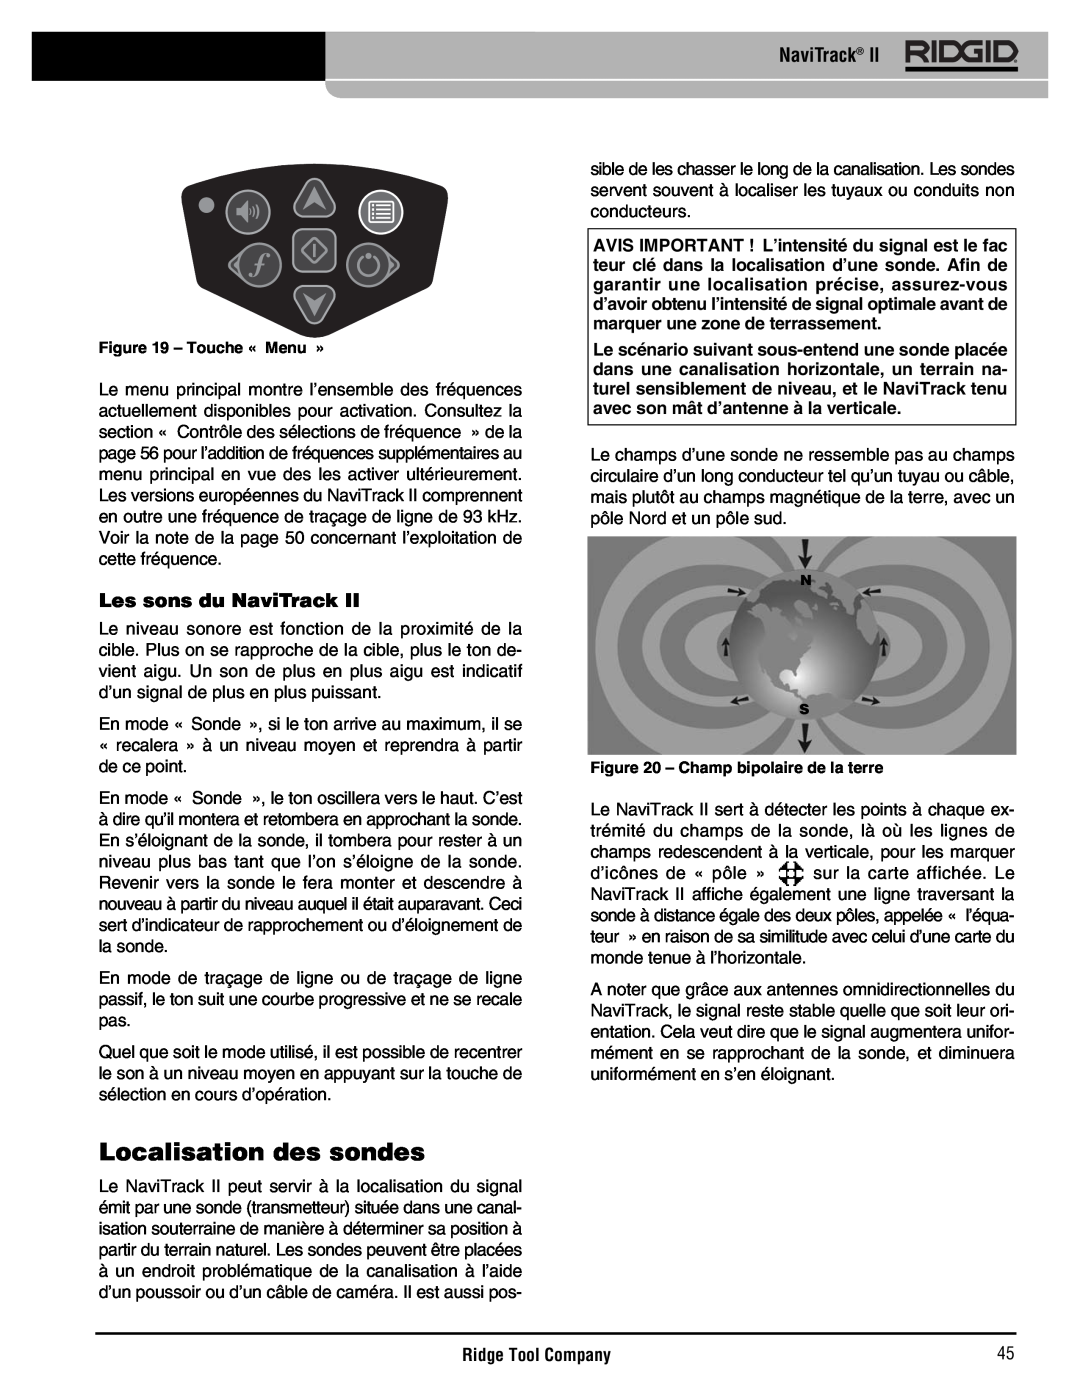 RIDGID Metal Detector manual Localisation des sondes, Les sons du NaviTrack, Ridge Tool Company 